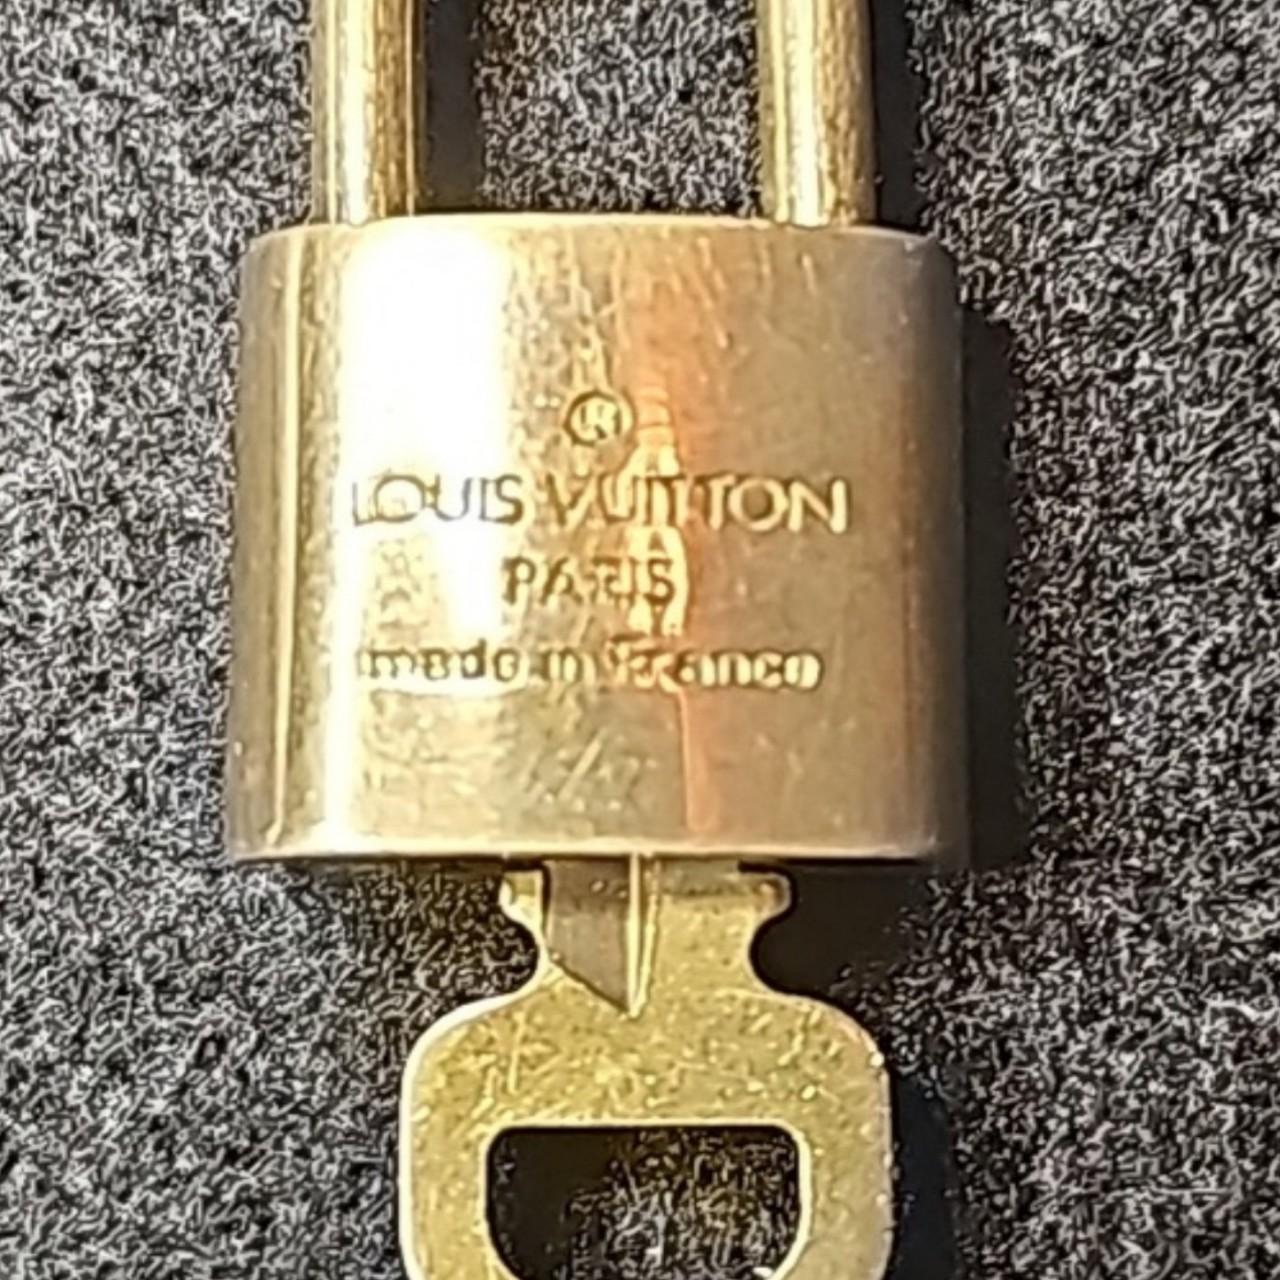 Authentic Louis Vuitton Brass Lock and 2 Keys Set #305